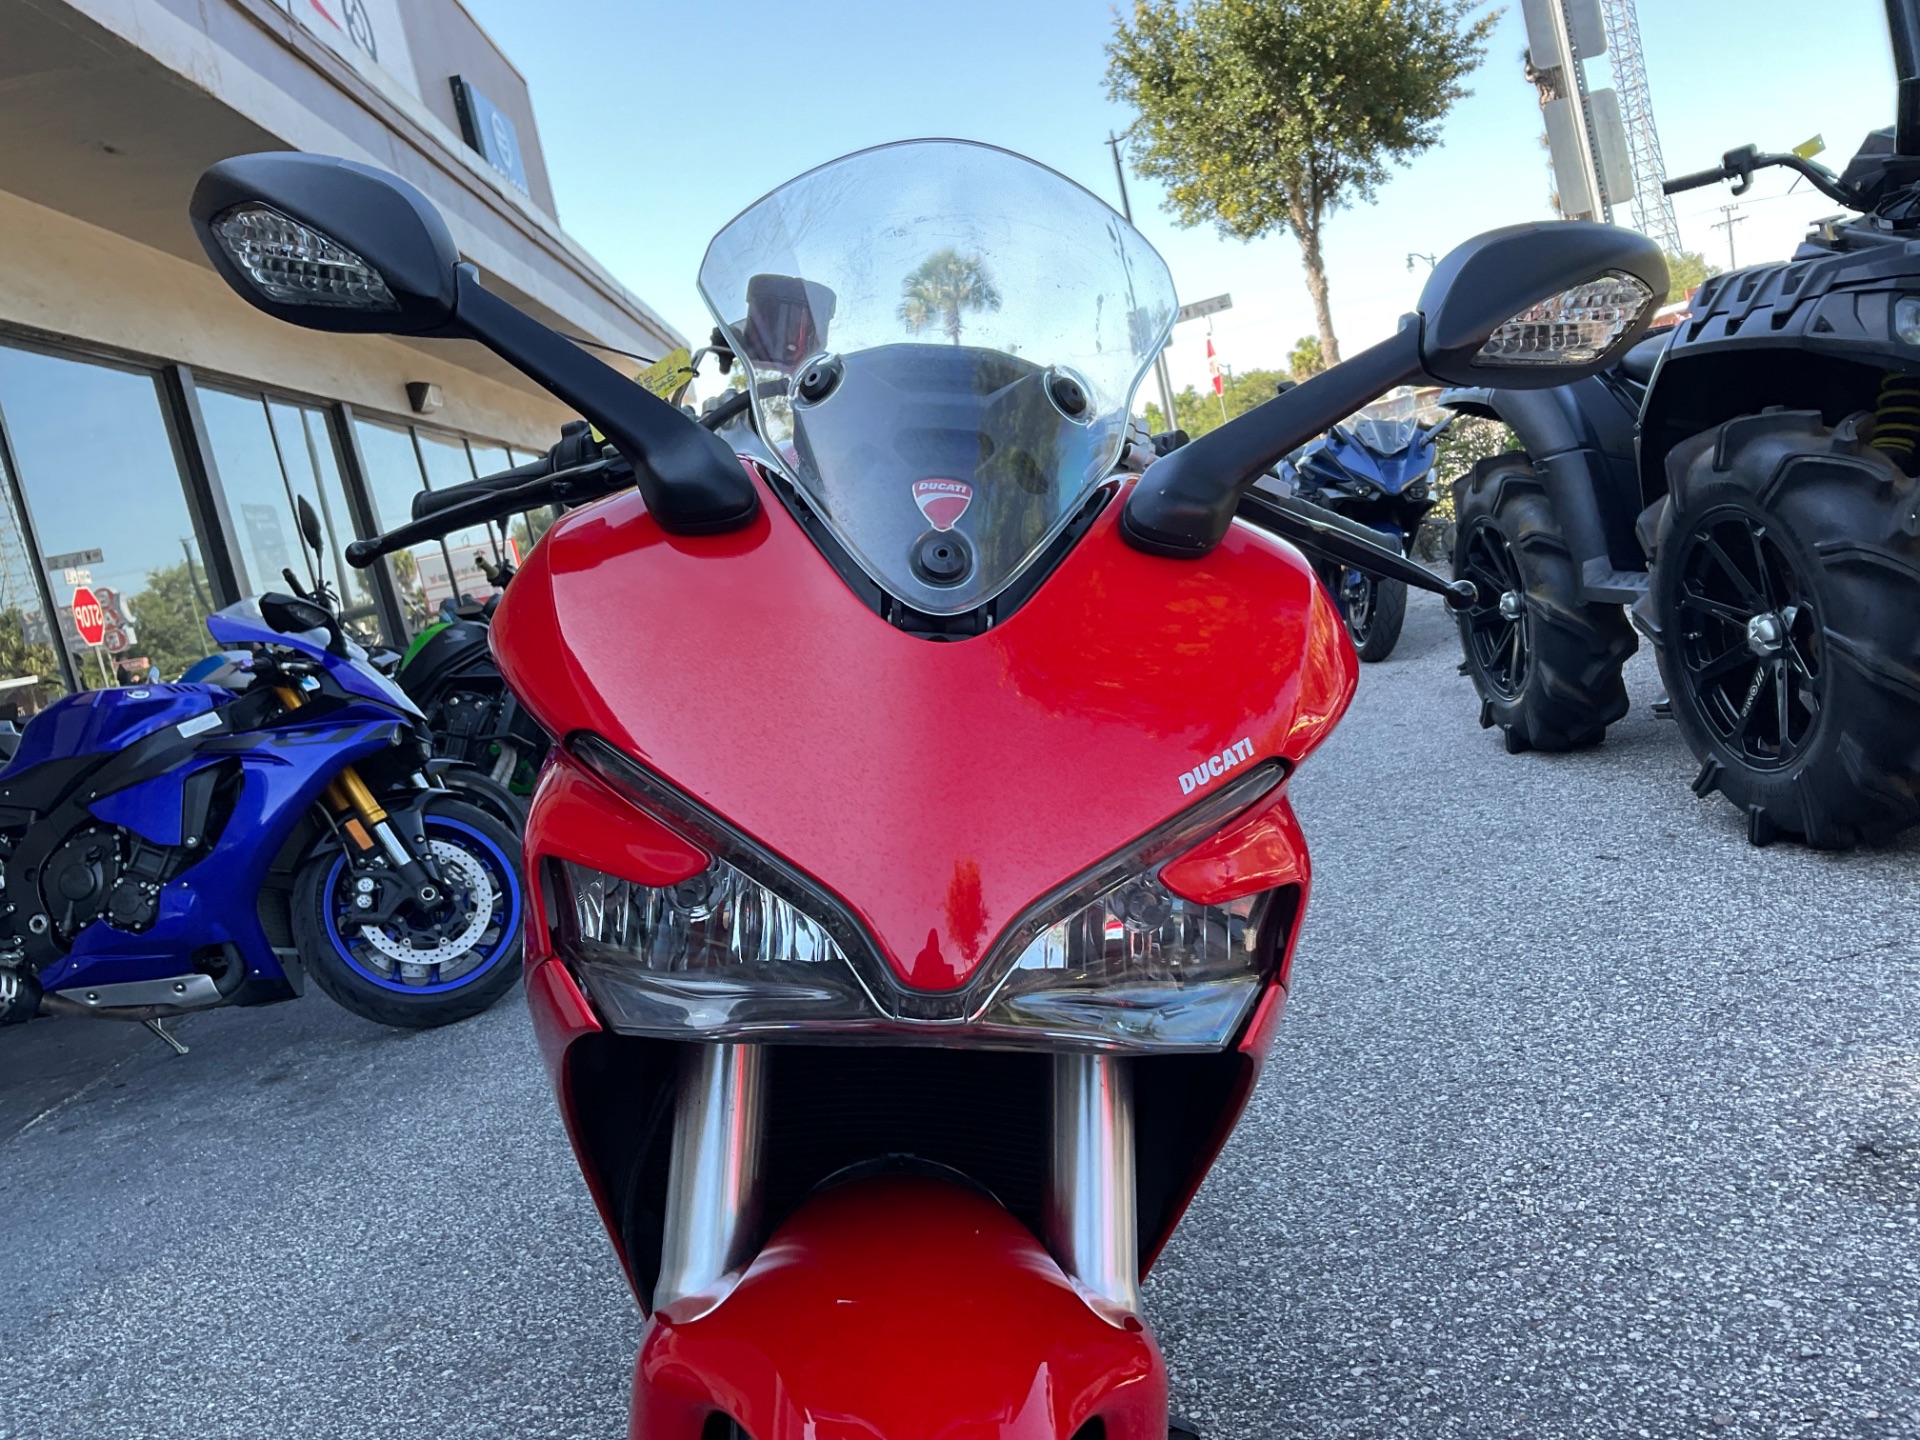 2018 Ducati SuperSport in Sanford, Florida - Photo 16